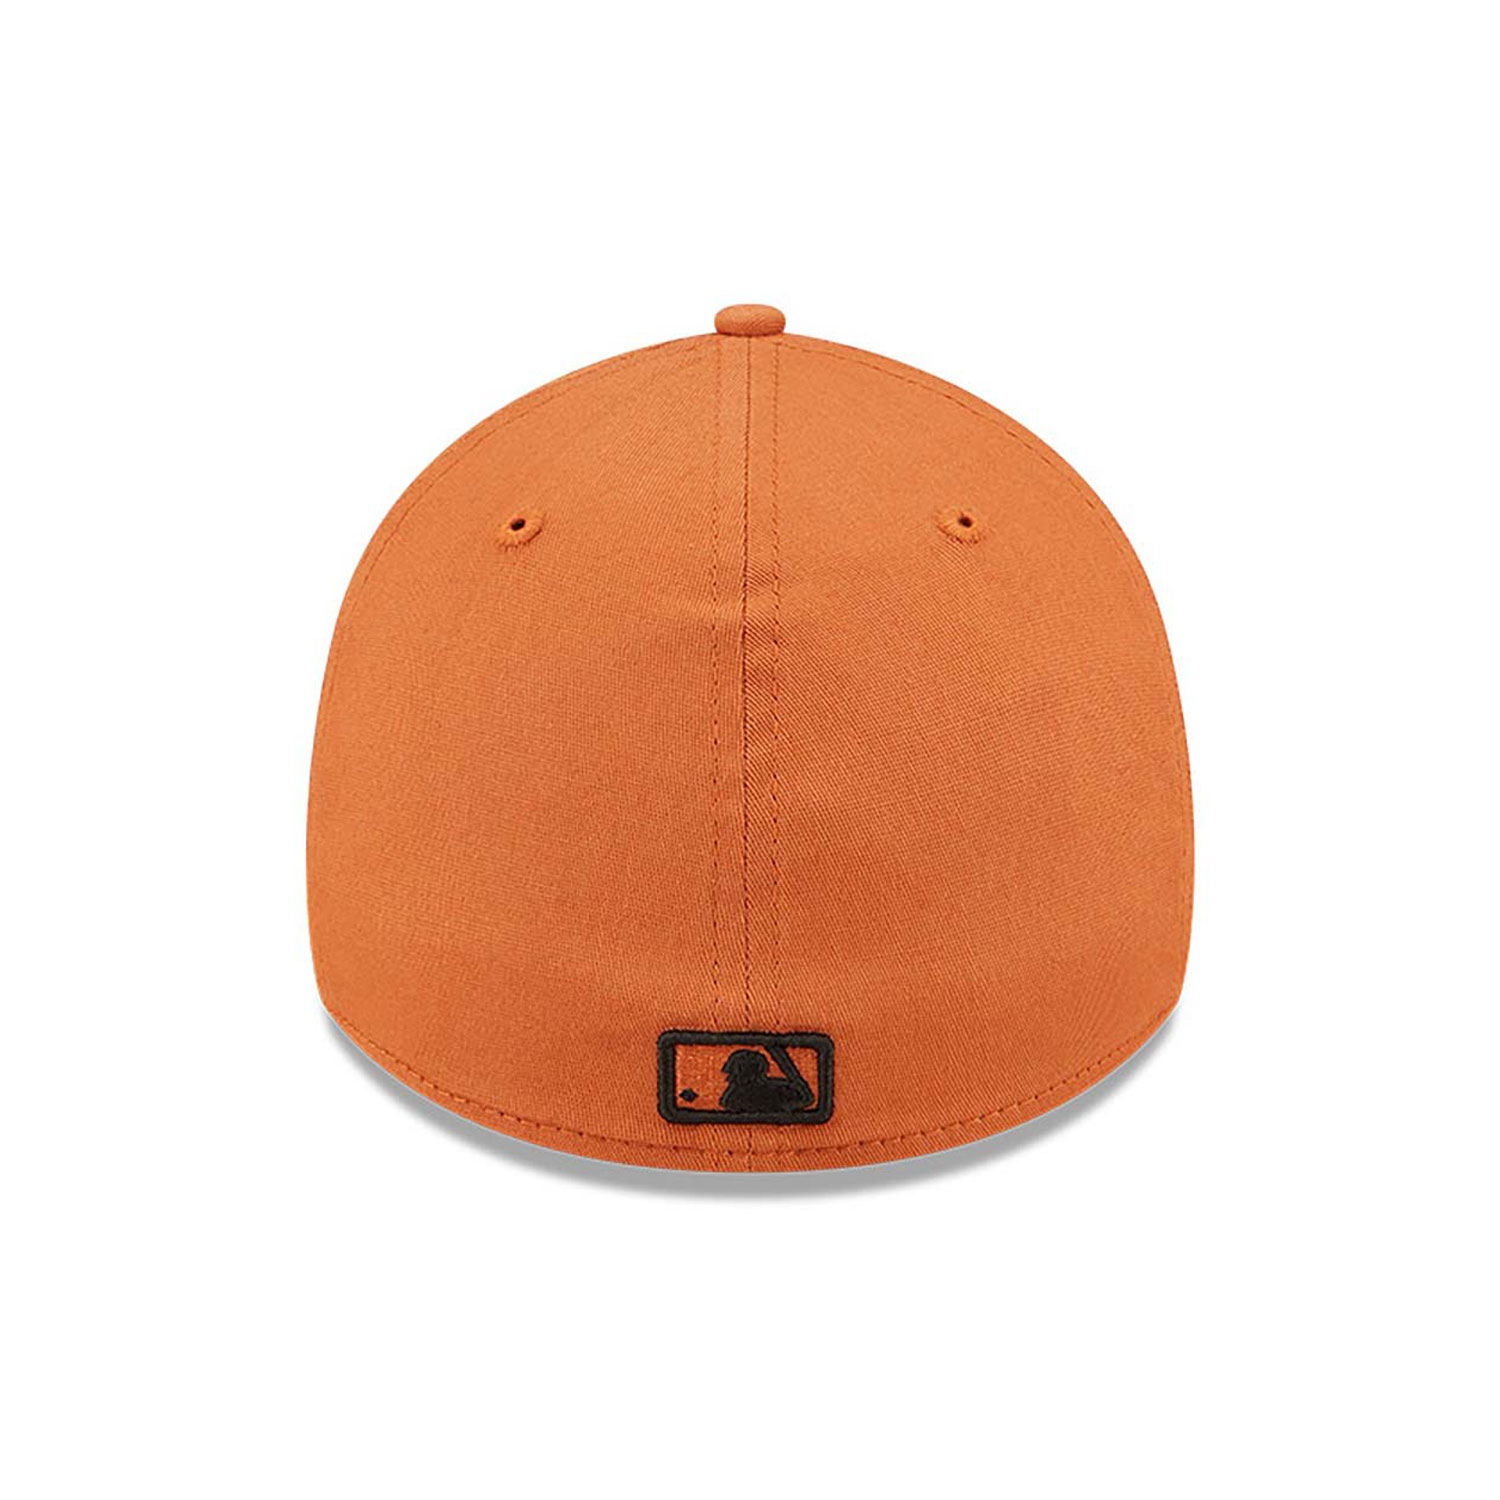 New York Yankees League Essential Orange 39THIRTY Stretch Fit Cap